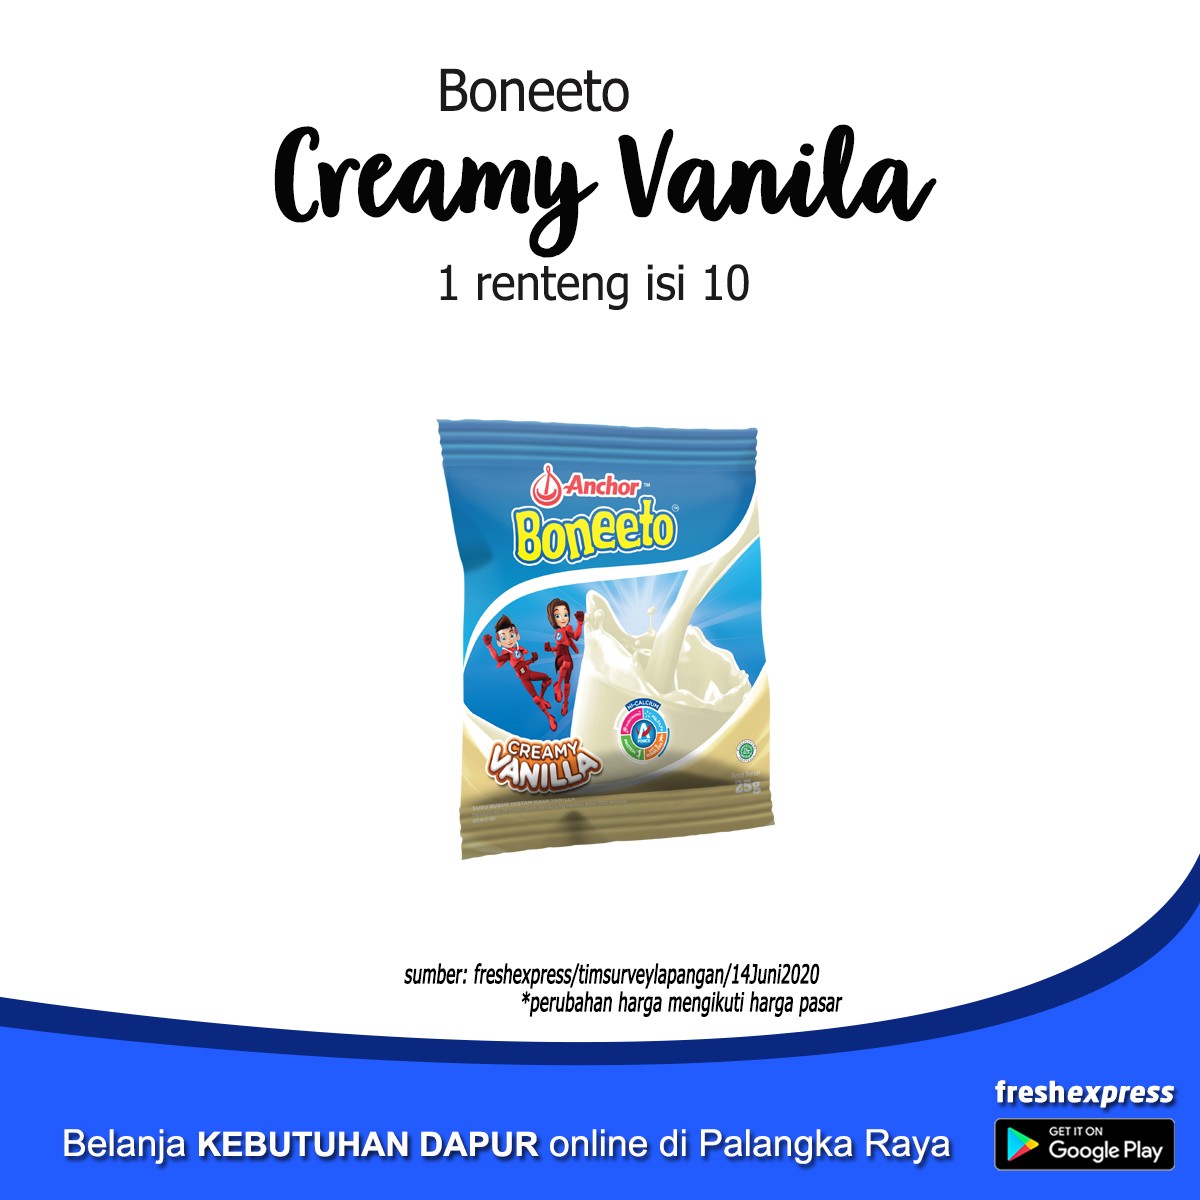 Boneeto Creamy Vanila Isi 10